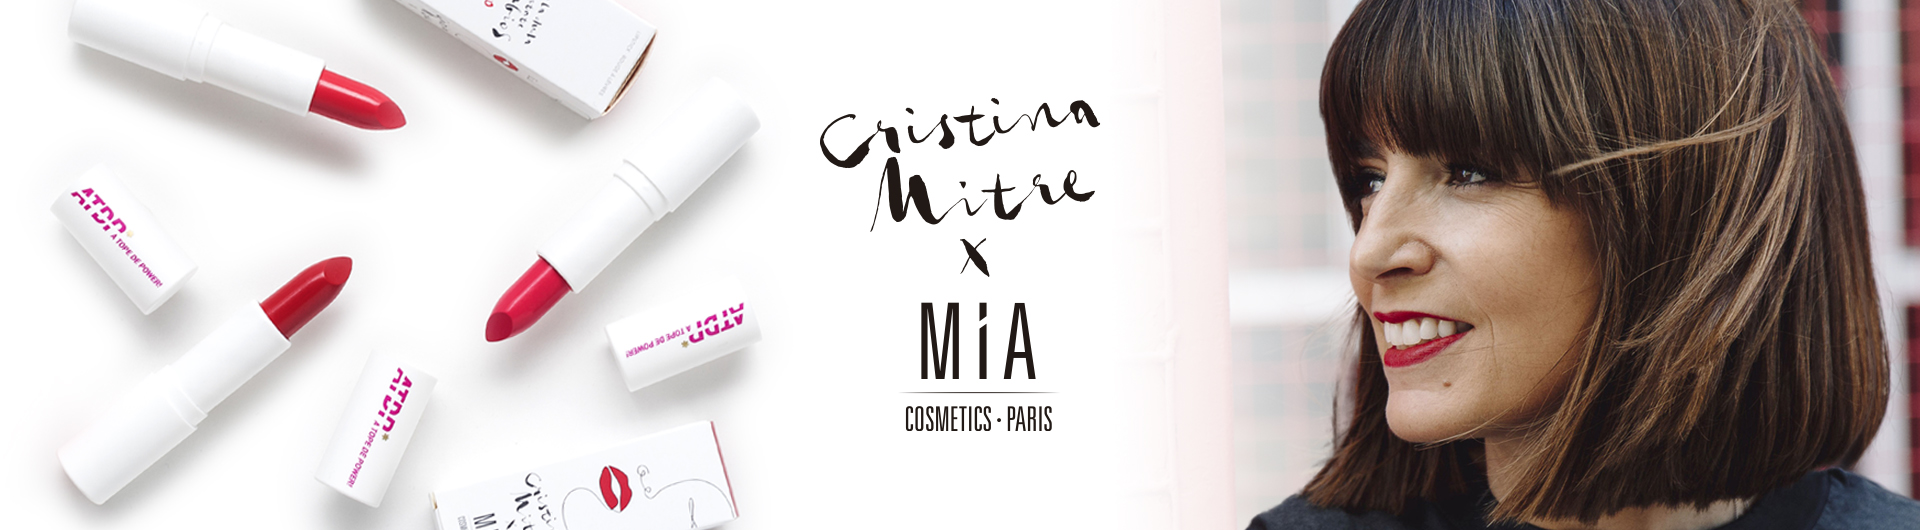 Mia Cosmetics Paris & Maûbe - banner